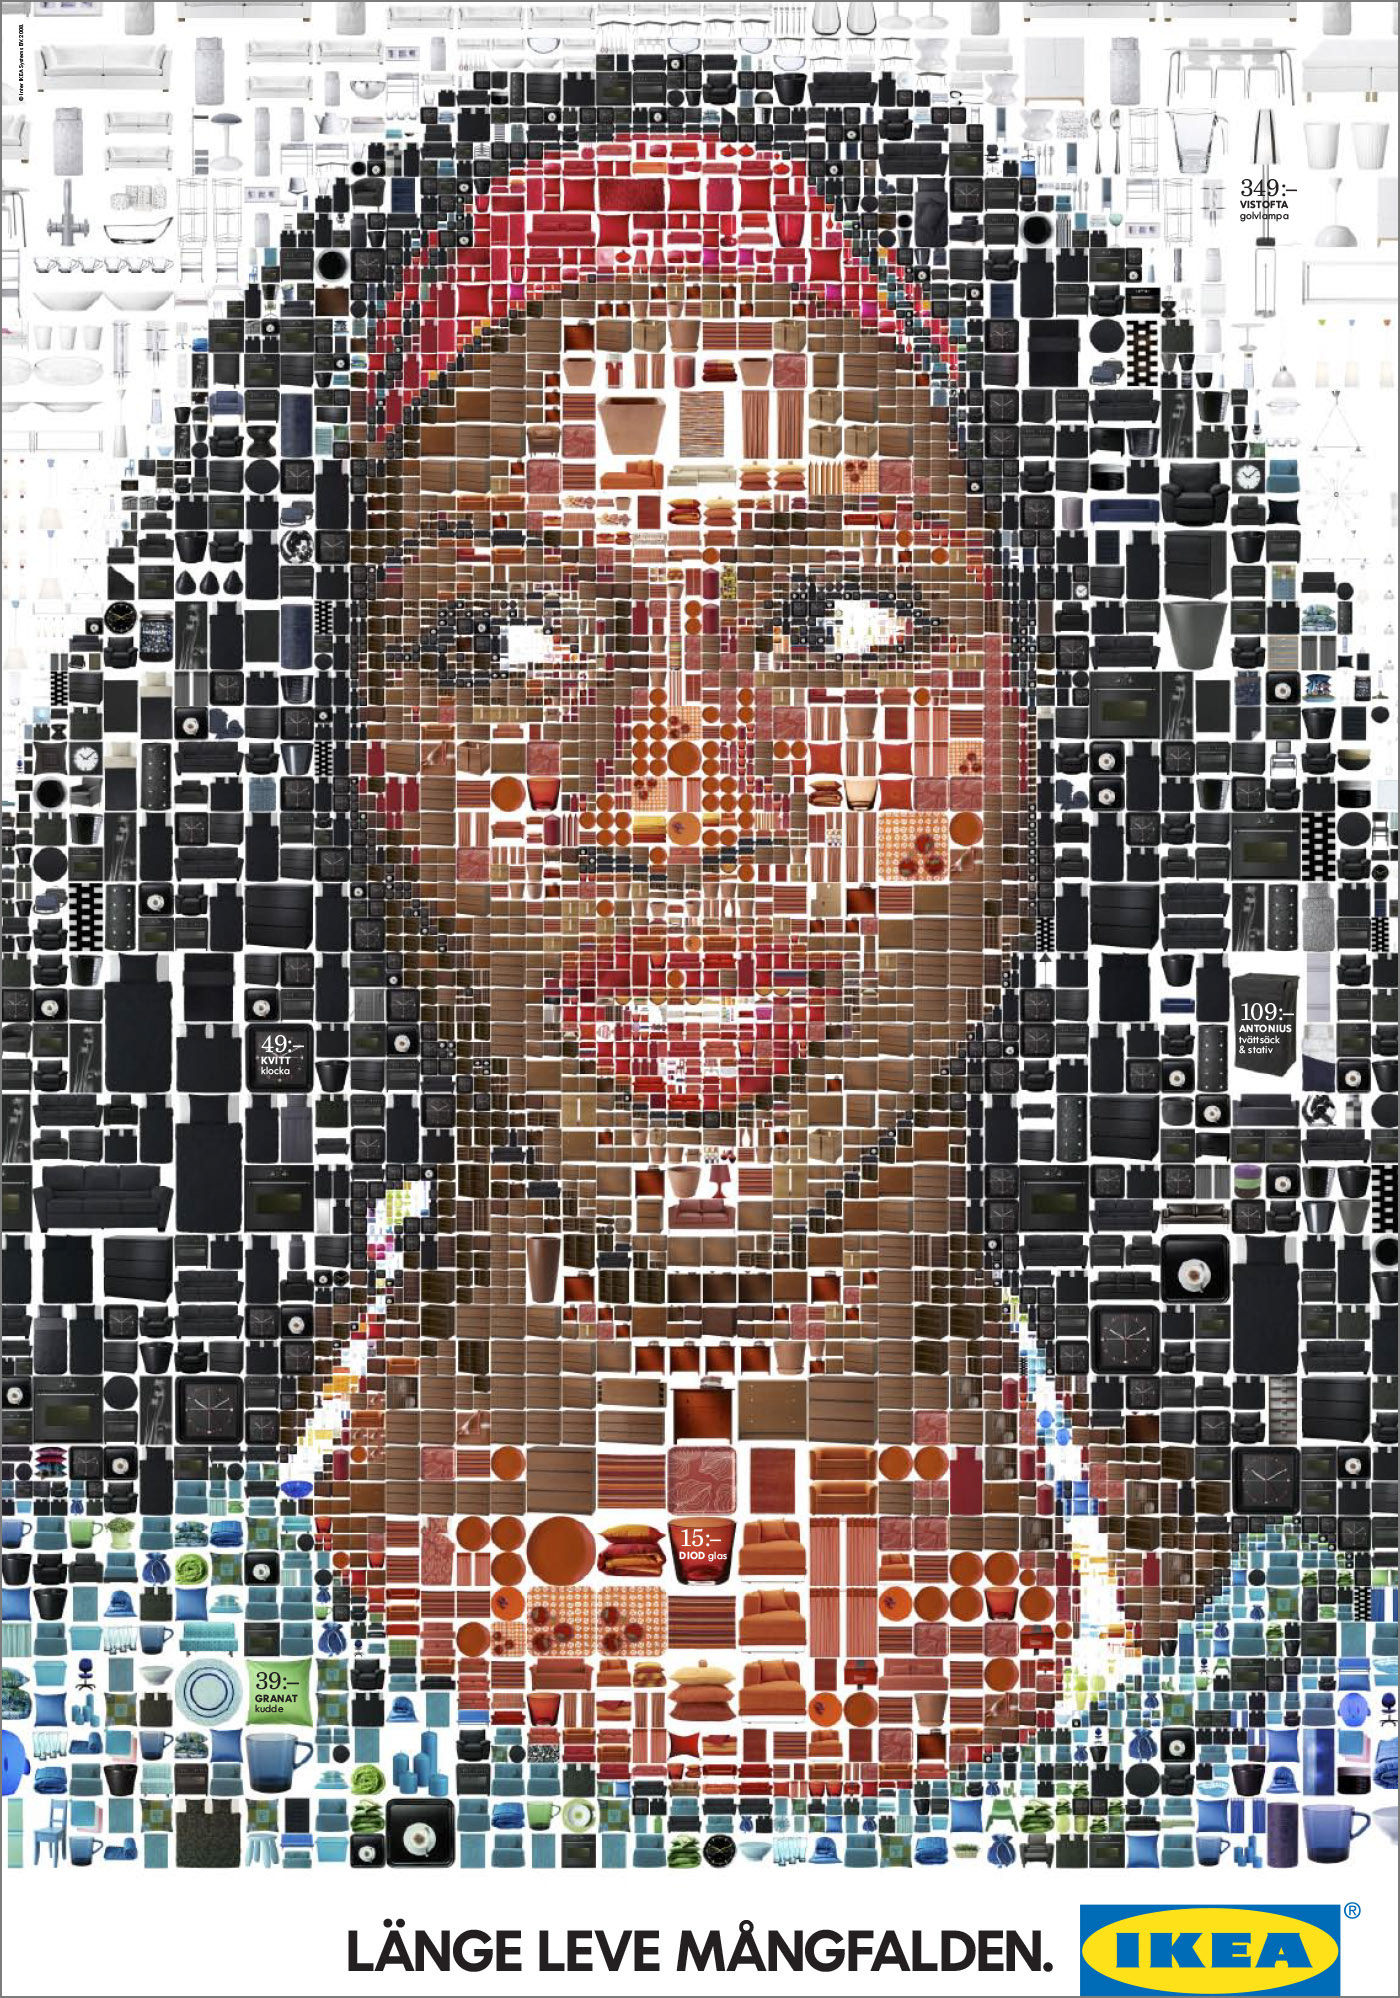 photomosaic visual design Advertising Campaign billboard gay african american social design photocollage computer graphics portraits